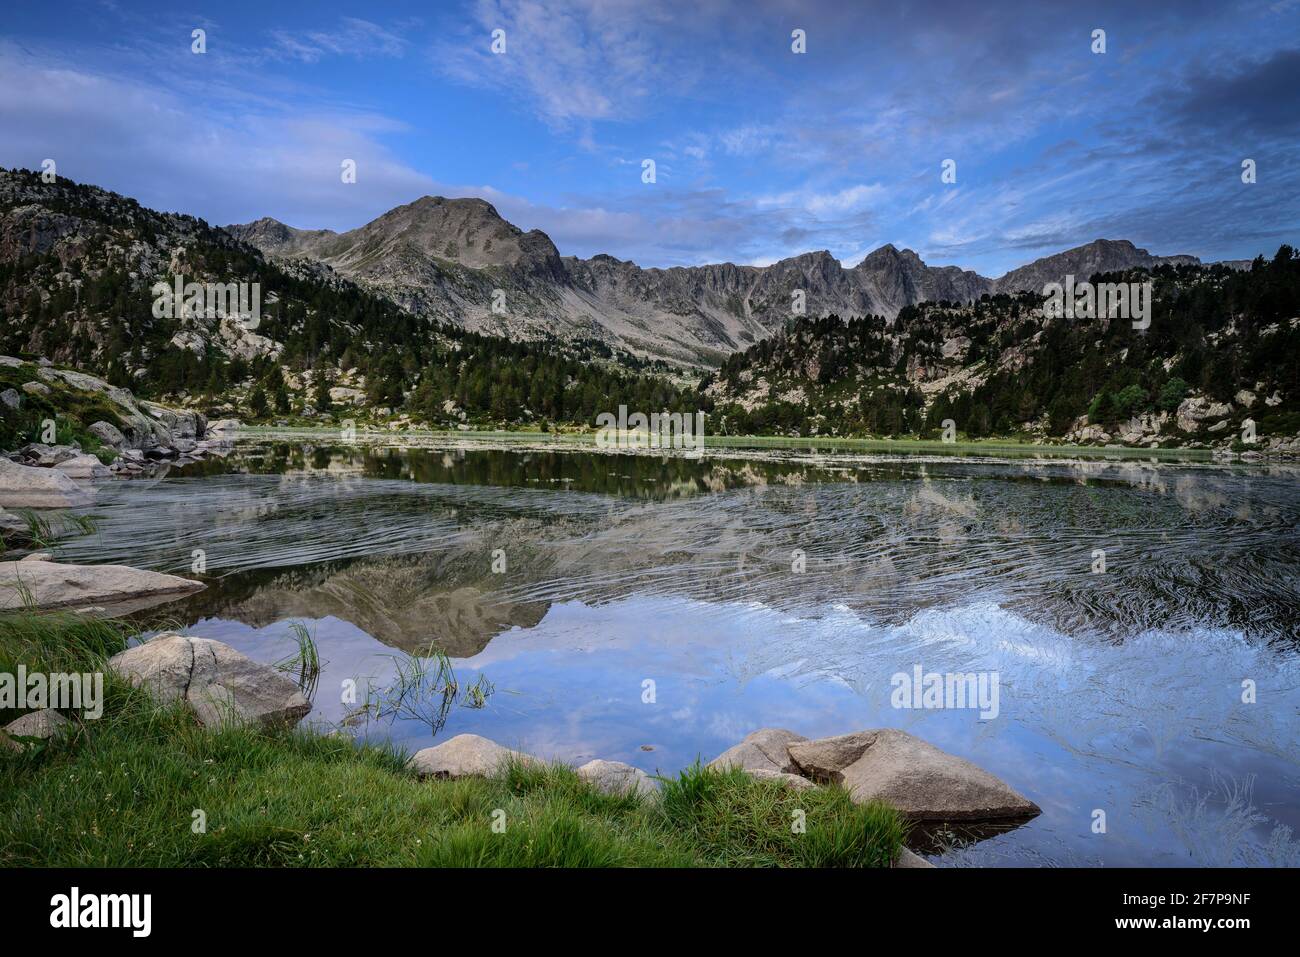 Estany primer de Pessons lago in una mattina estiva (circo di Pessons, Andorra, Pirenei) ESP: Estany primer de Pessons, una mañana de verano (Andorra) Foto Stock